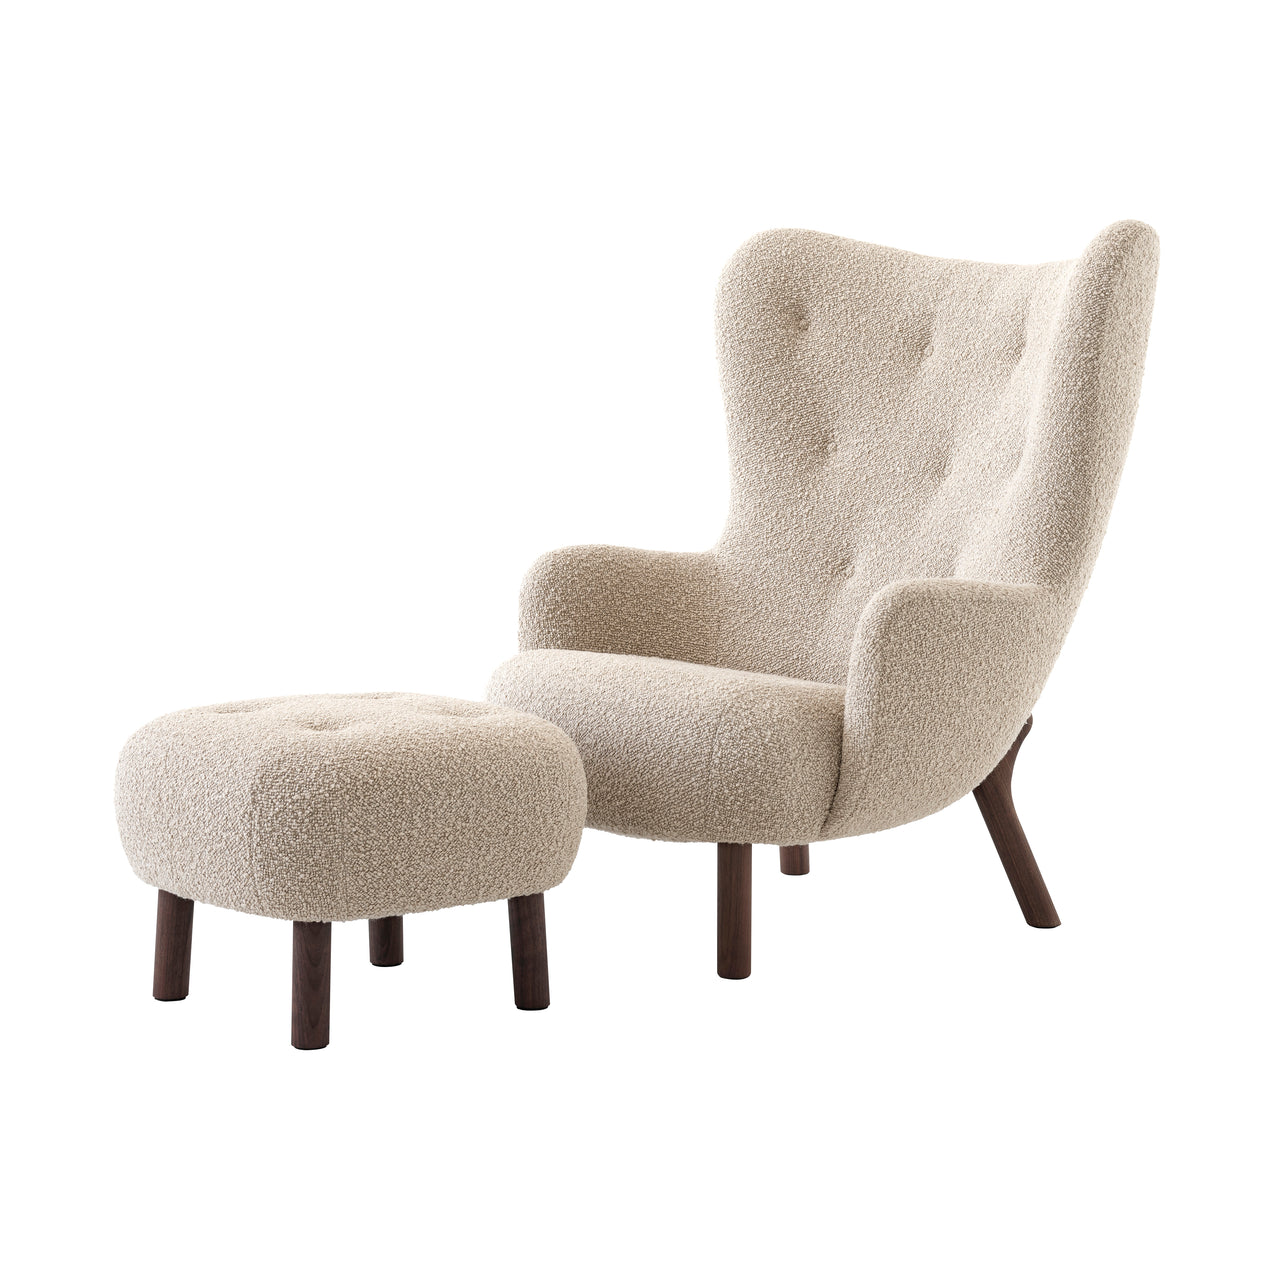 Petra Lounge Chair VB3 + Pouf ATD1: Oiled Walnut + Karakorum 003